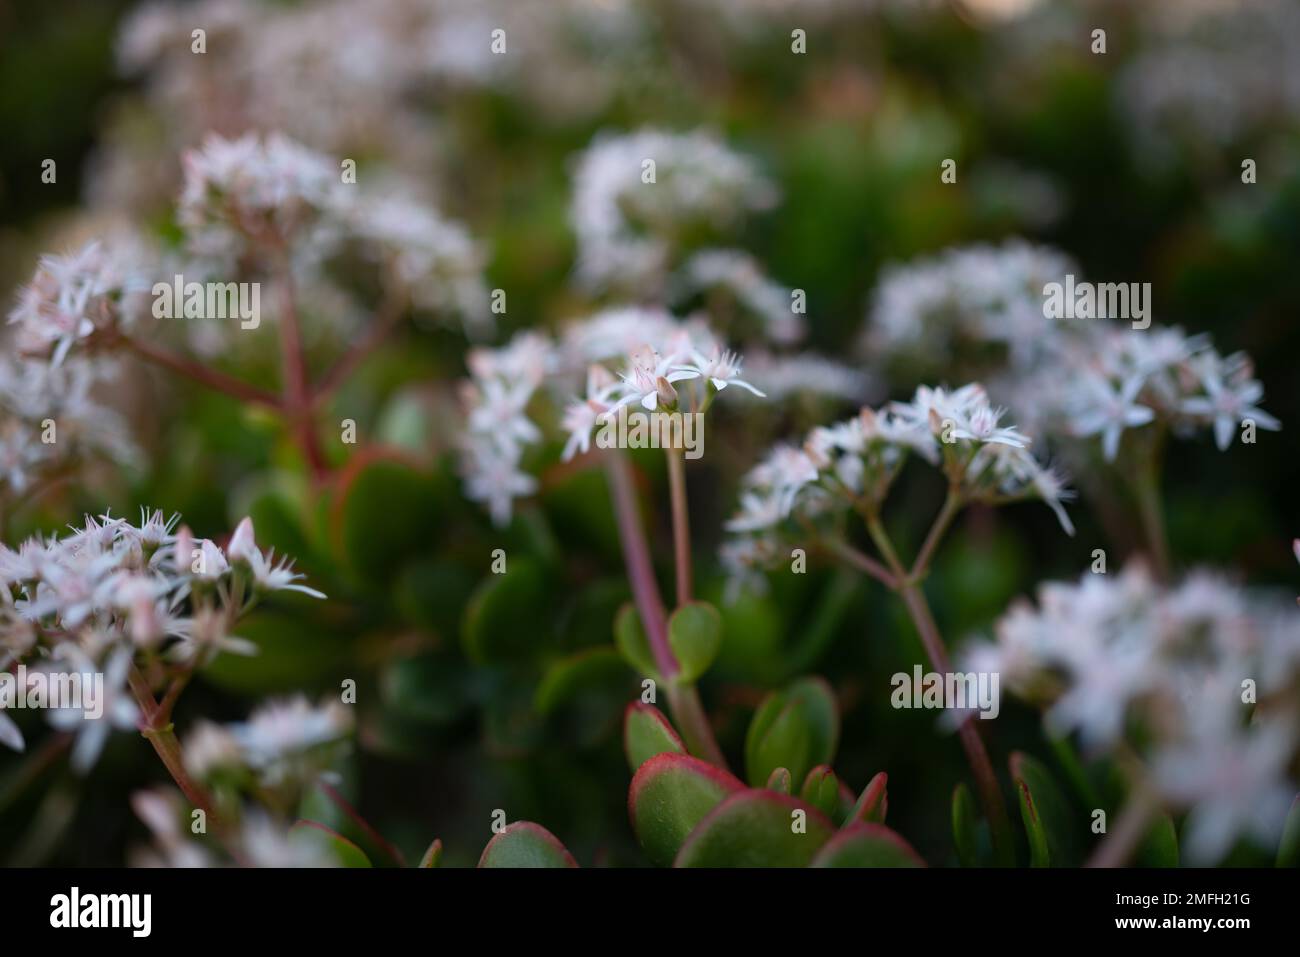 Mostly blurred white flowers of Jade plant or crassula ovata Stock Photo